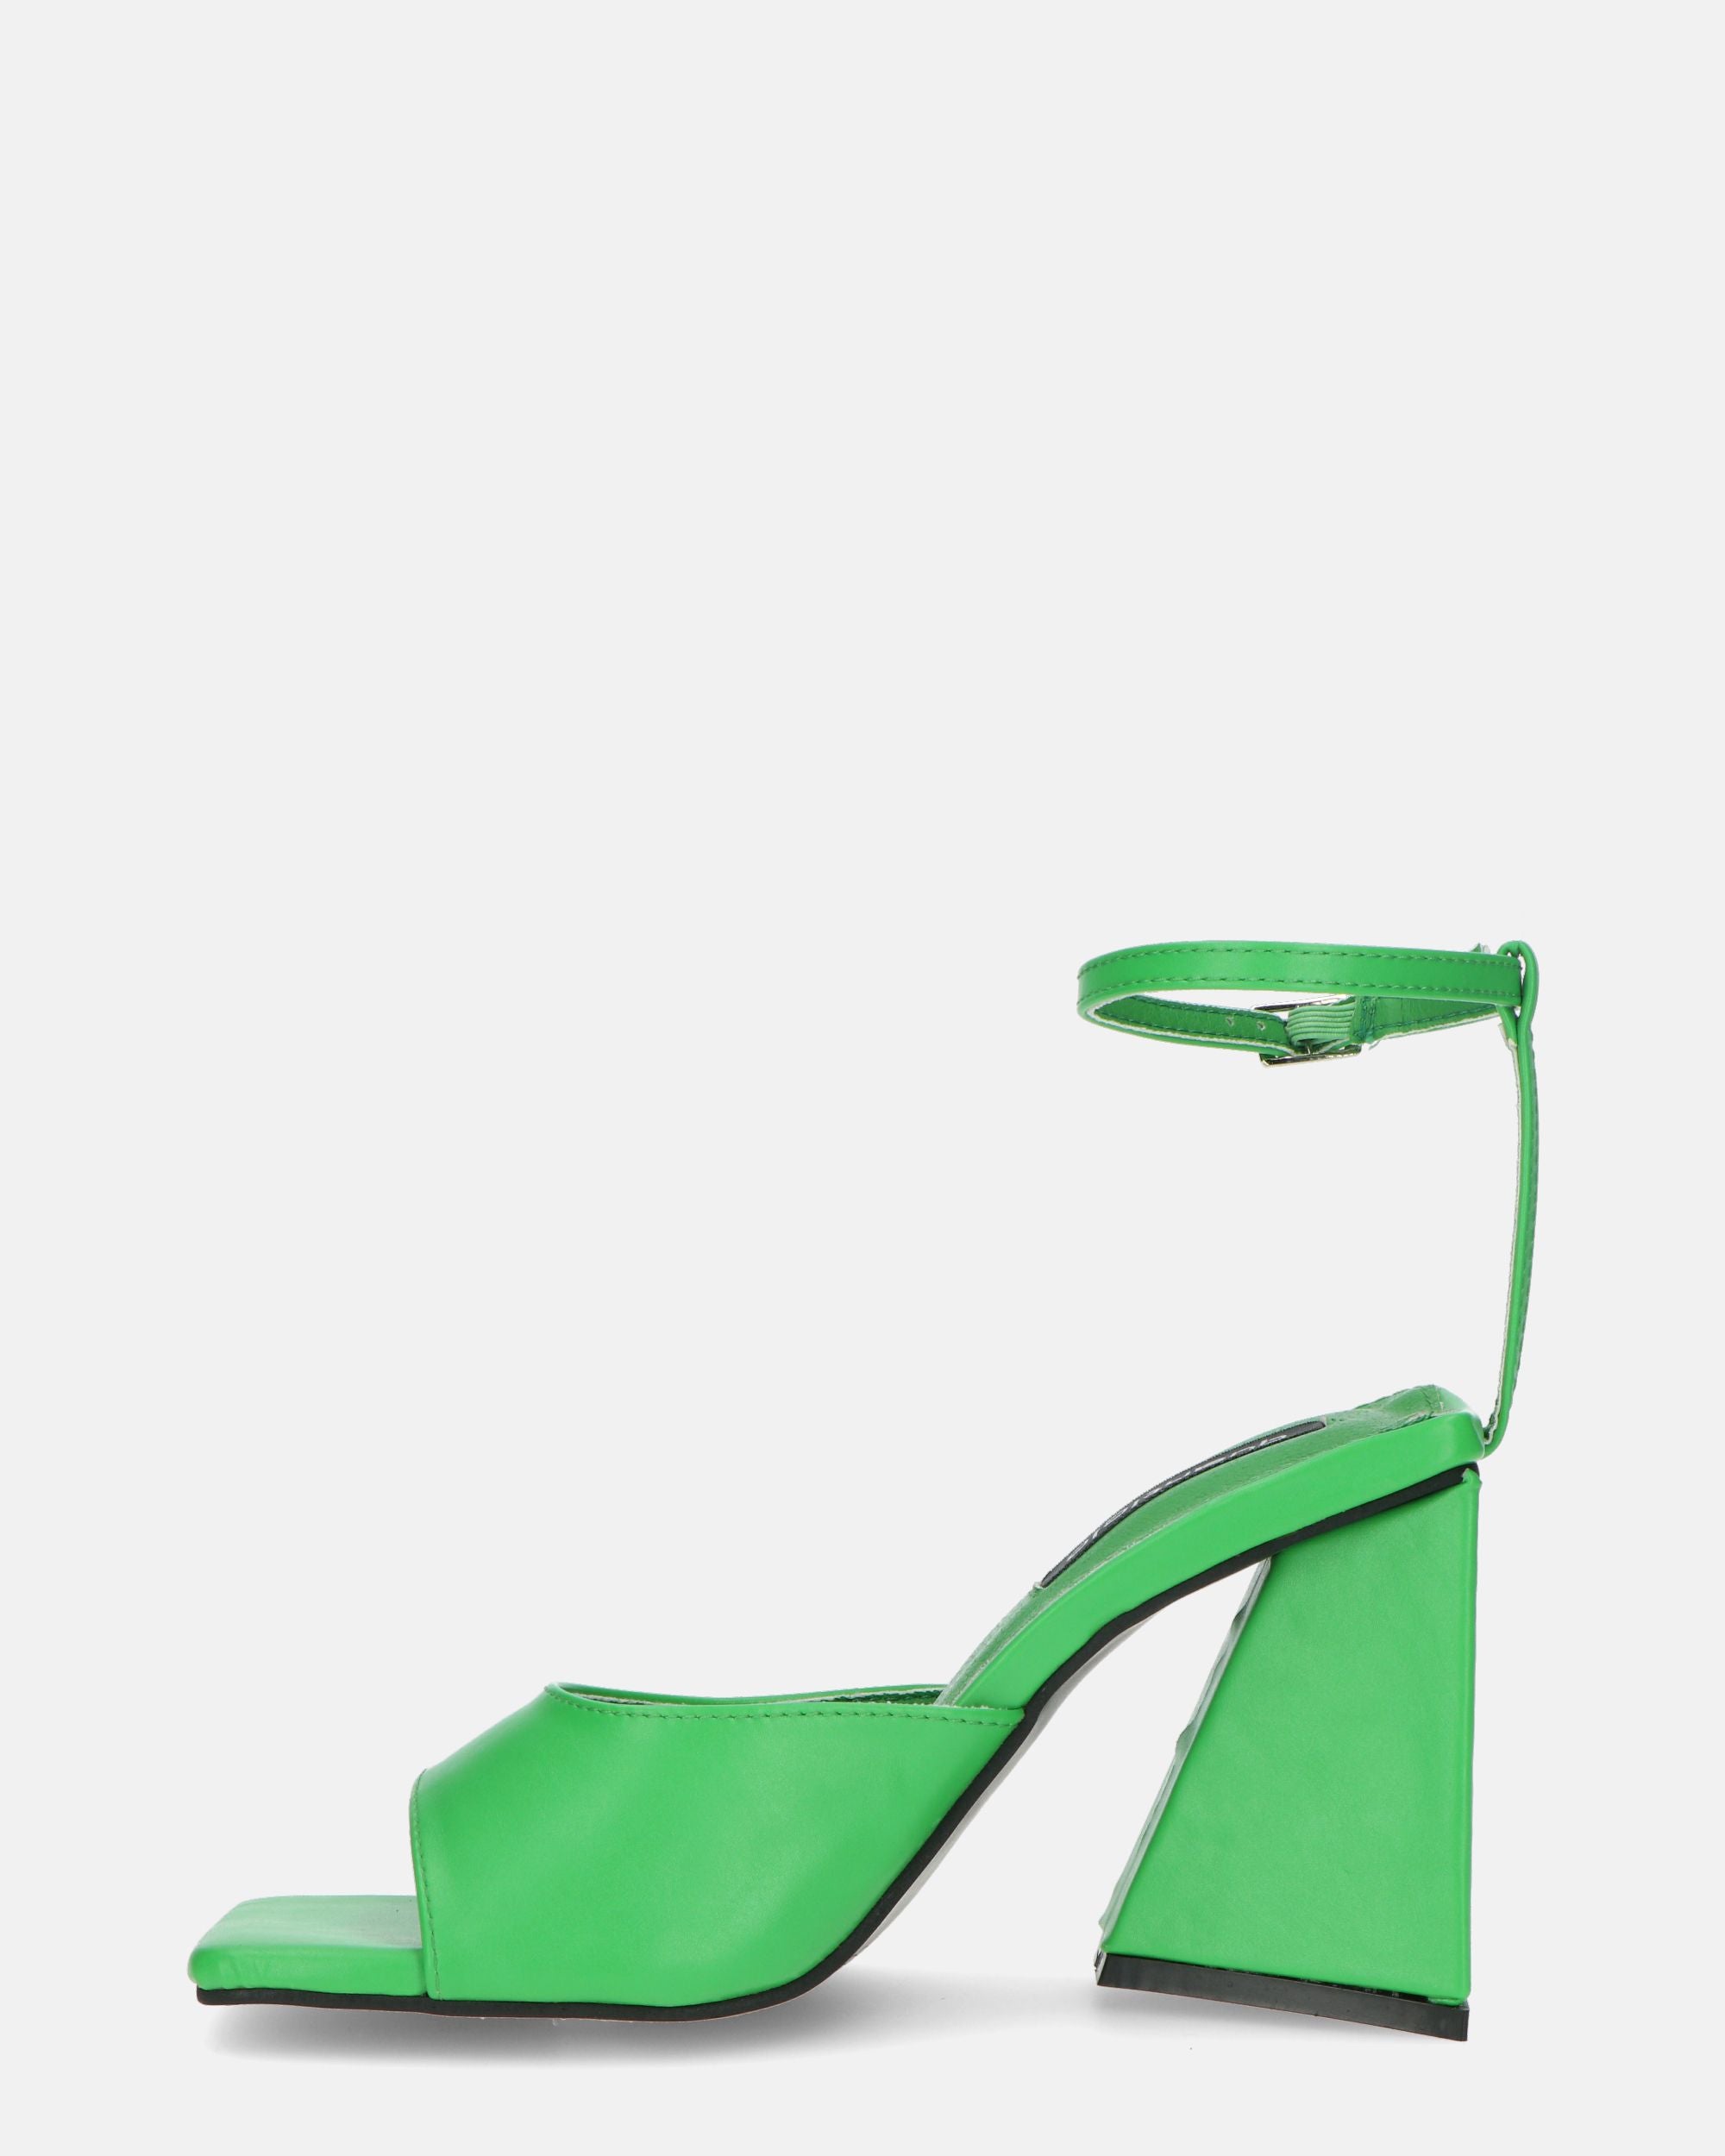 KUBRA - sandales à bride en éco-cuir vert